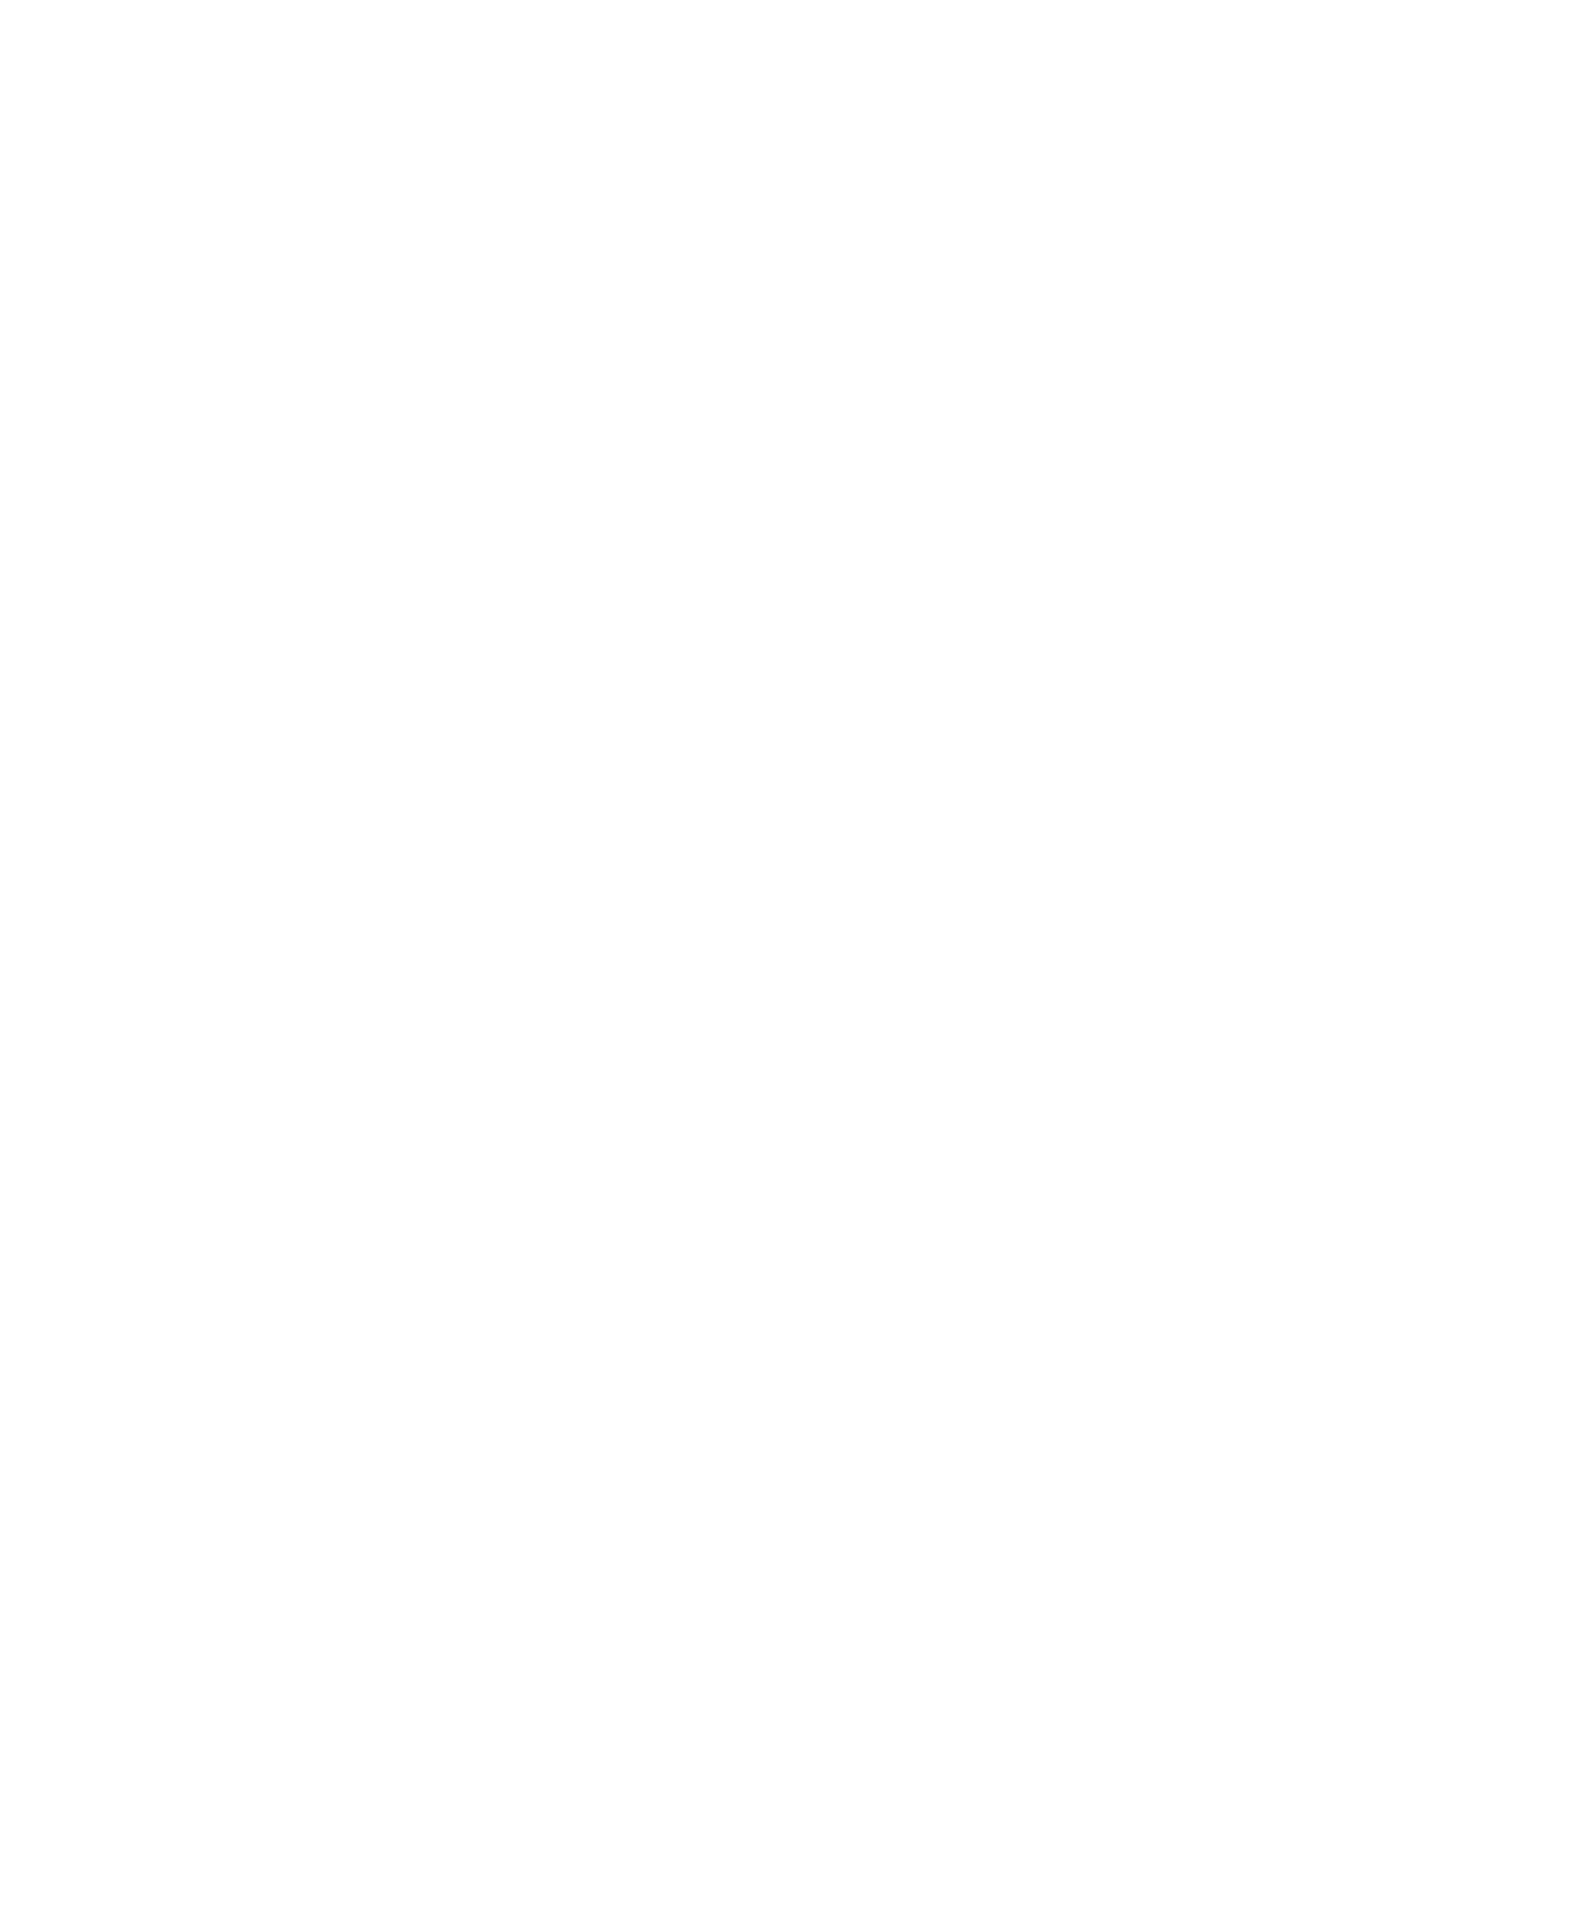 MediciNova logo for dark backgrounds (transparent PNG)